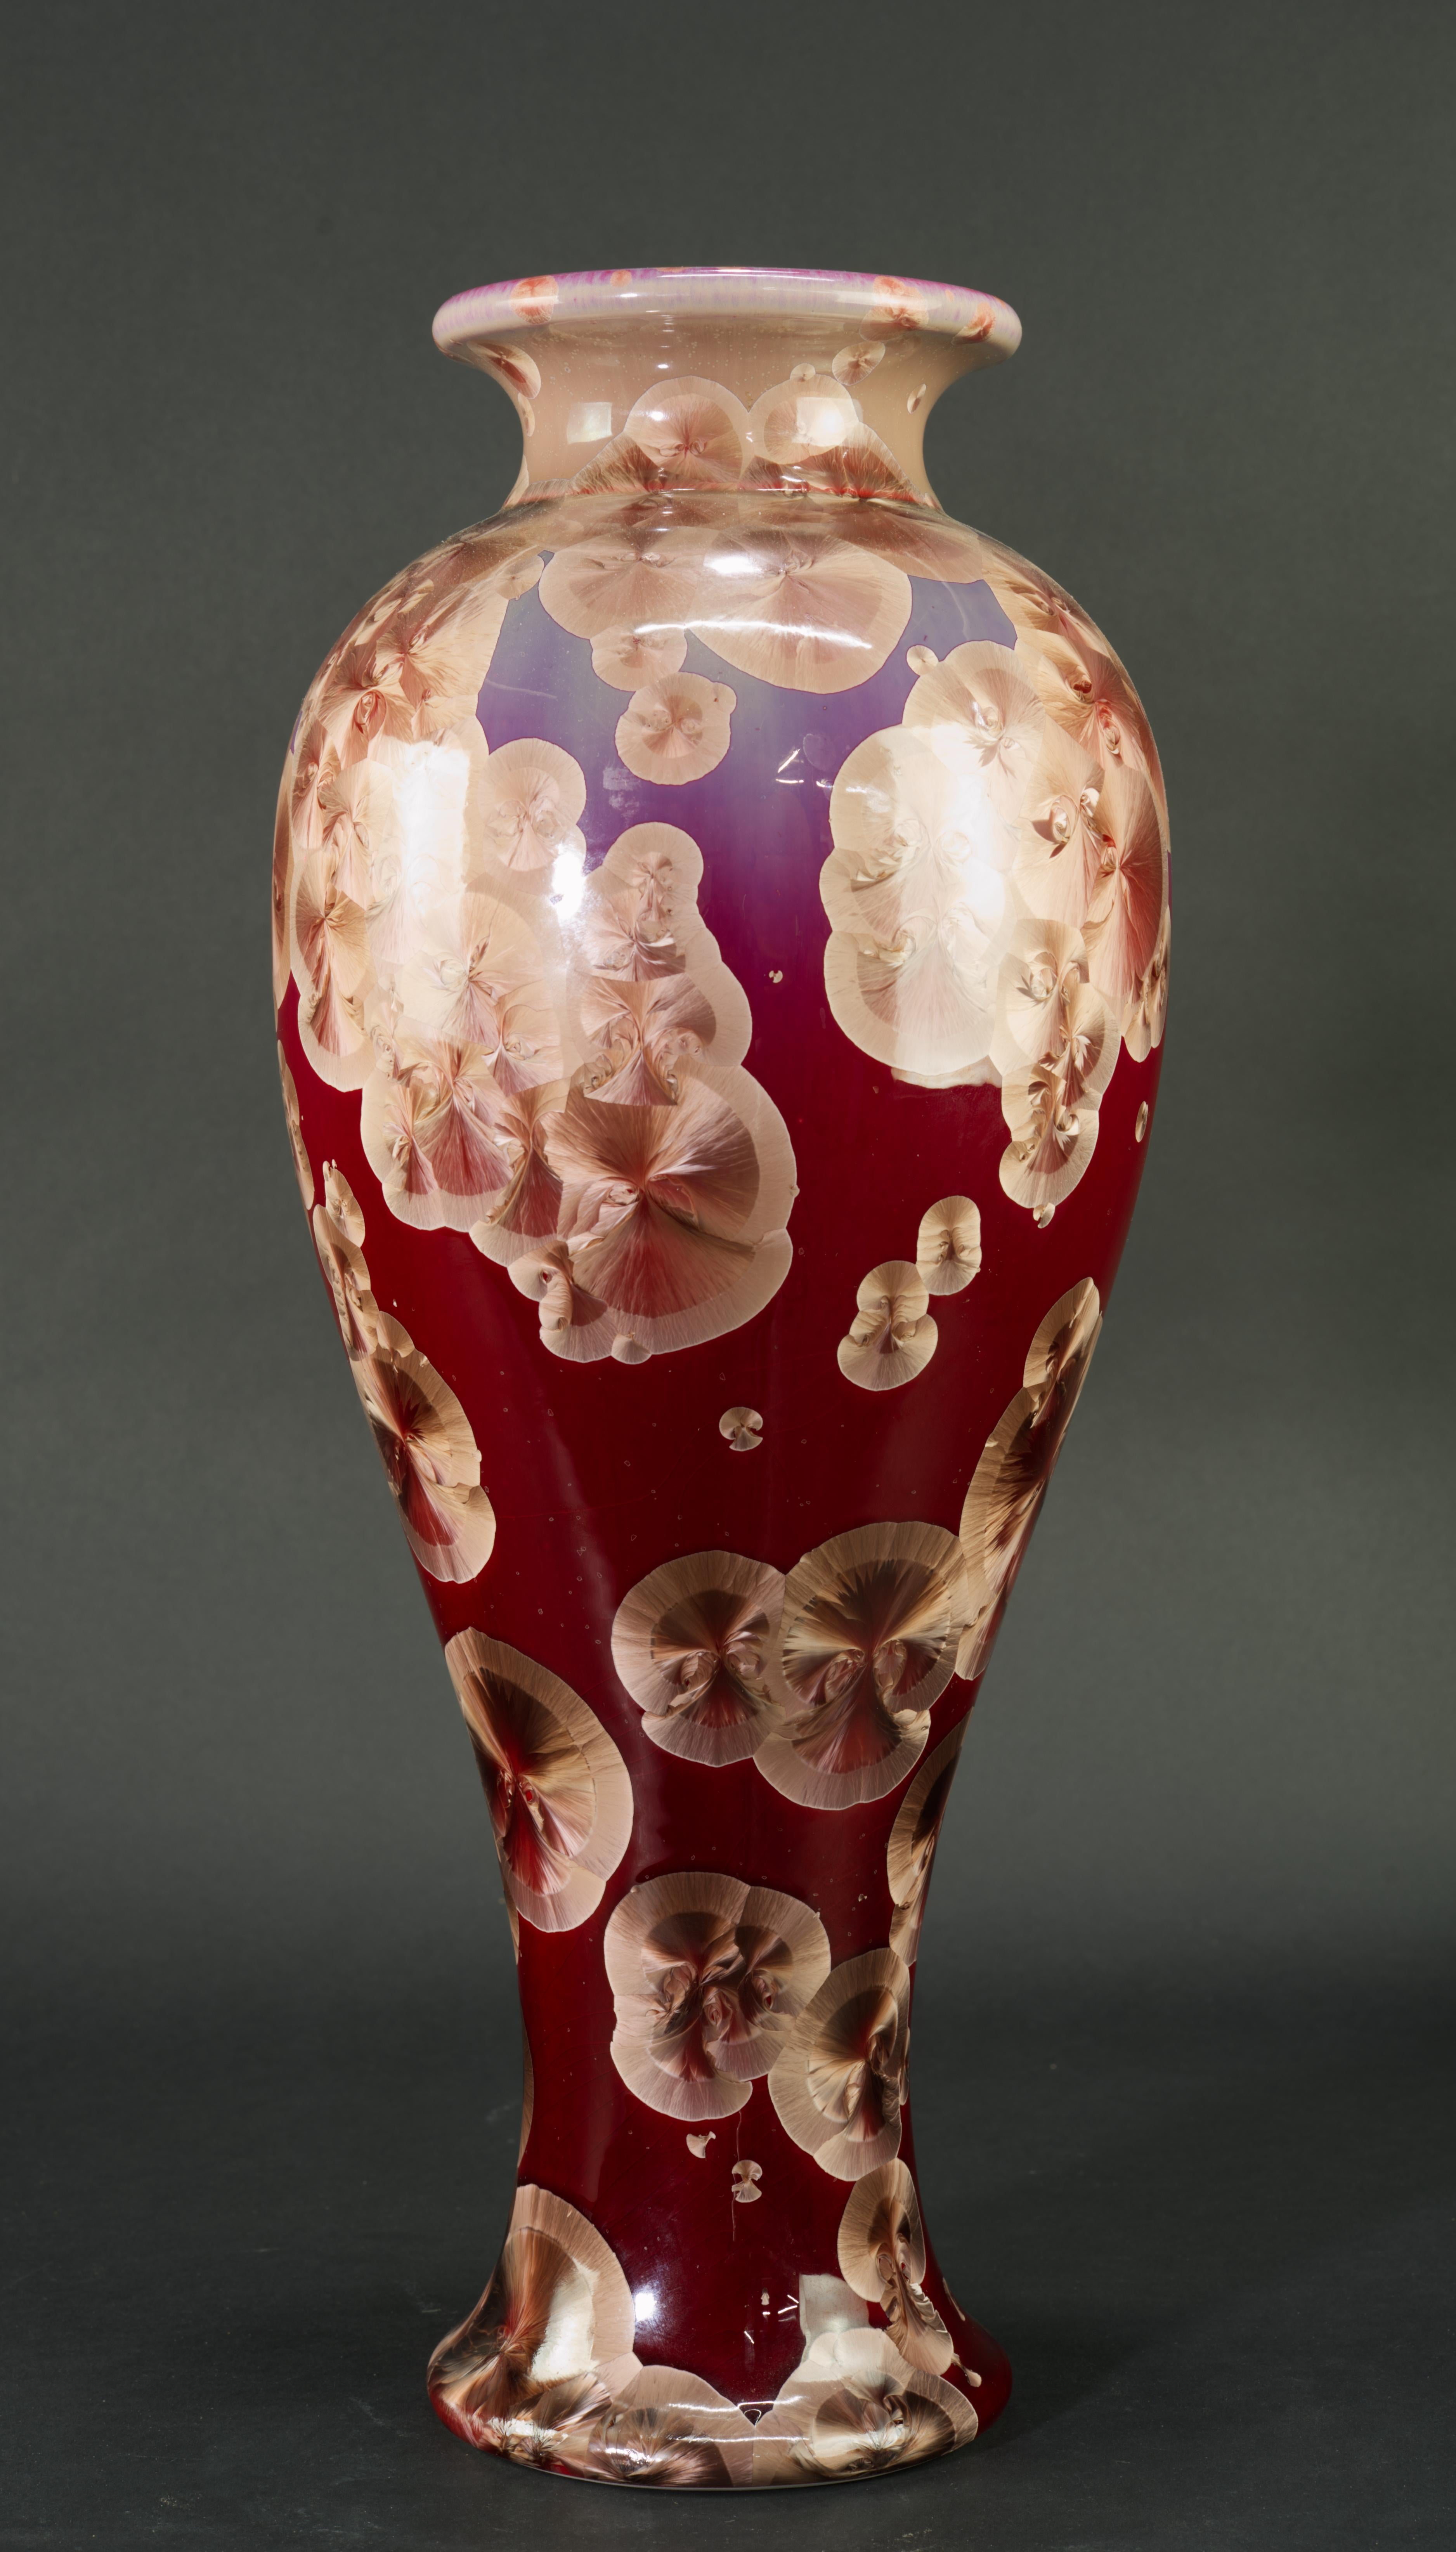 Mid-Century Modern Crystalline Glaze Ceramic Vase, Red and Beige, American Art Studio Pottery For Sale